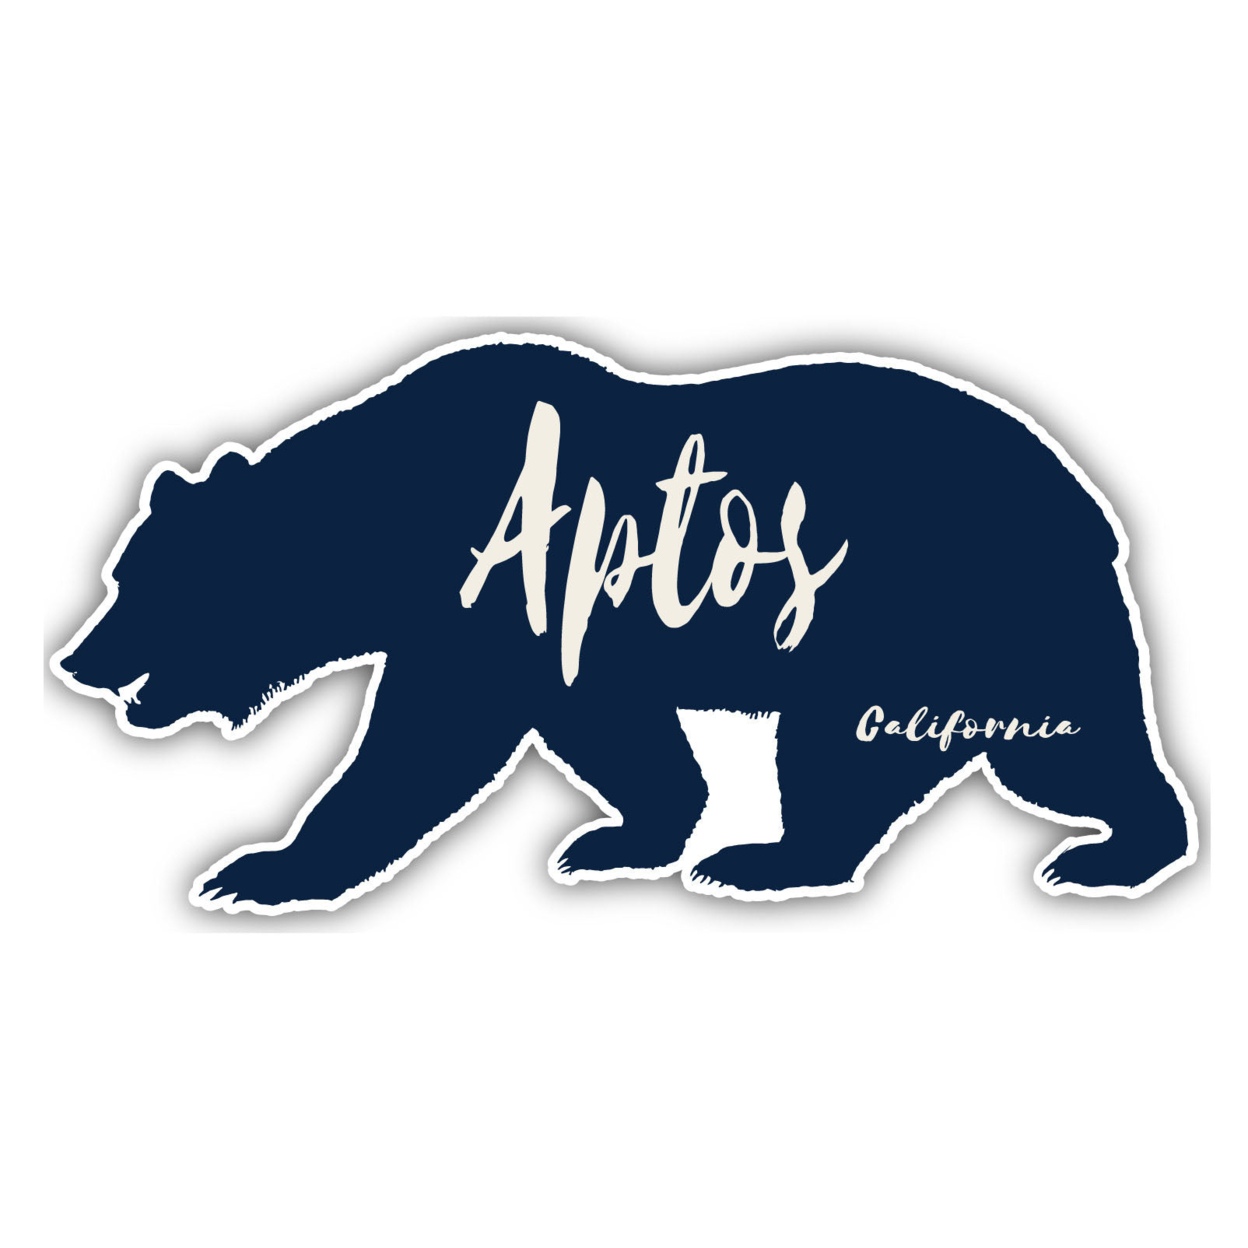 Aptos California Souvenir Decorative Stickers (Choose Theme And Size) - 4-Pack, 8-Inch, Tent